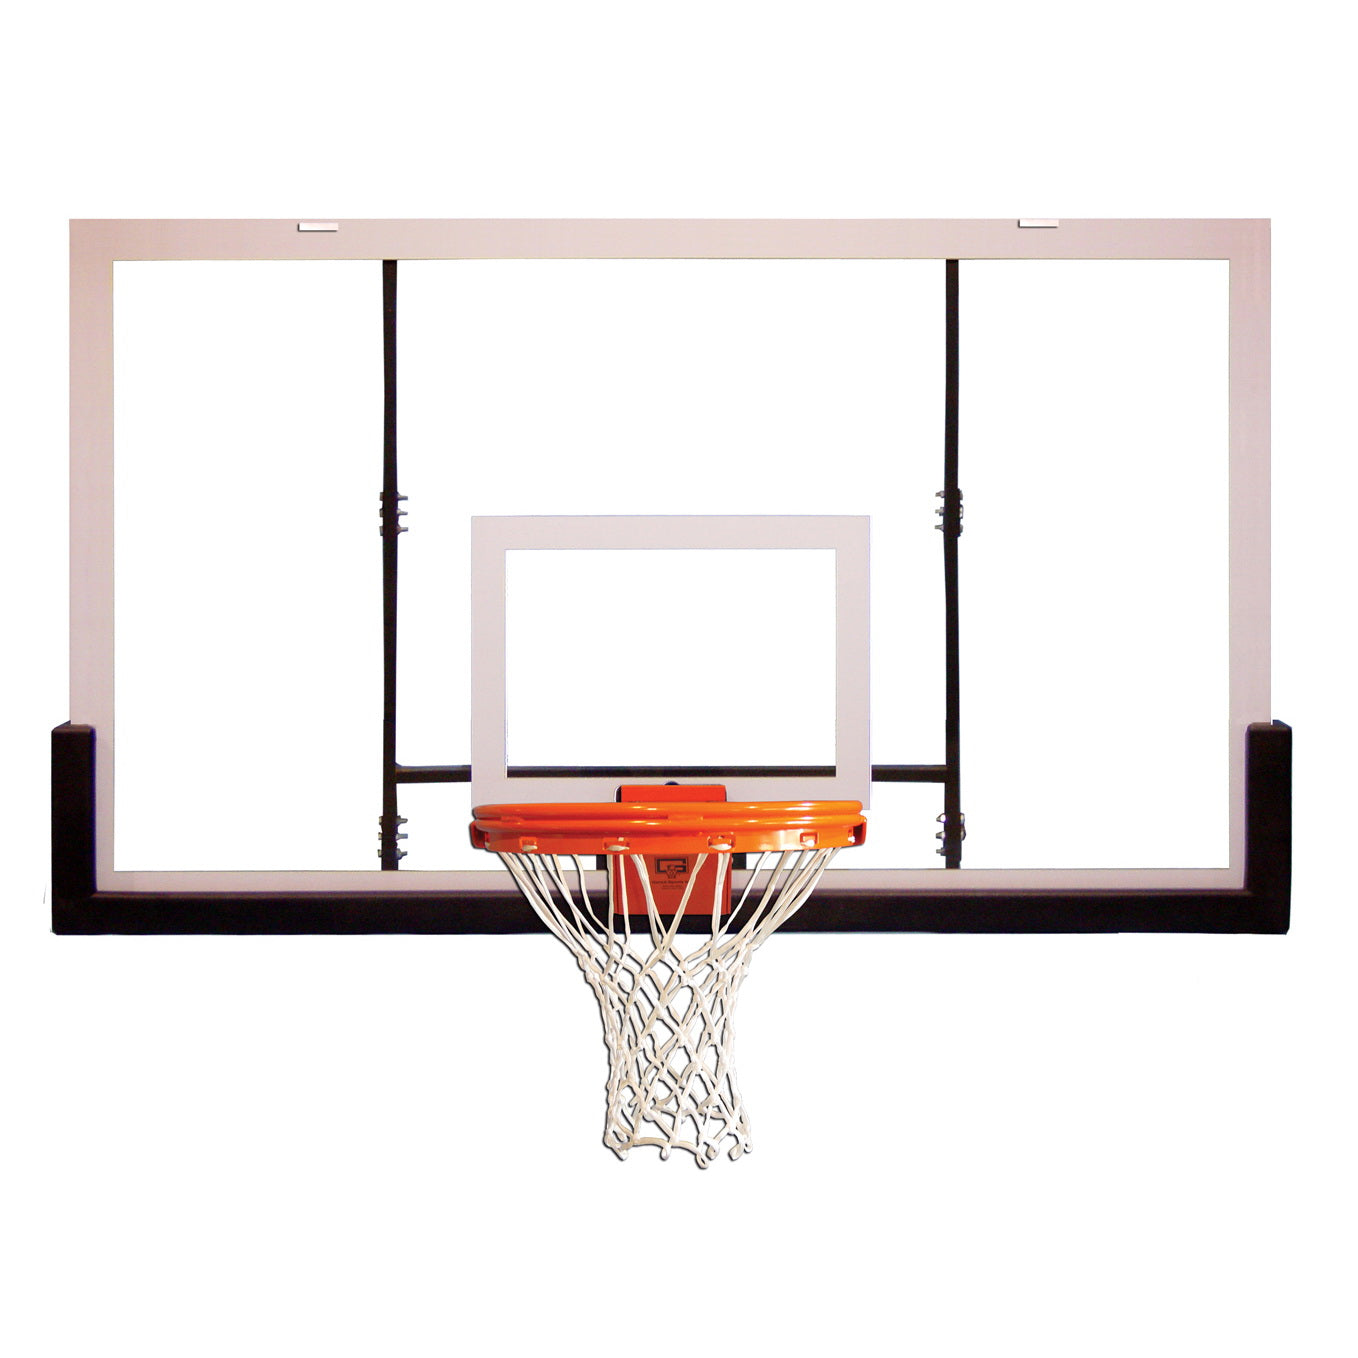 Gared Recreational Full Sized Acrylic Basketball Backboard